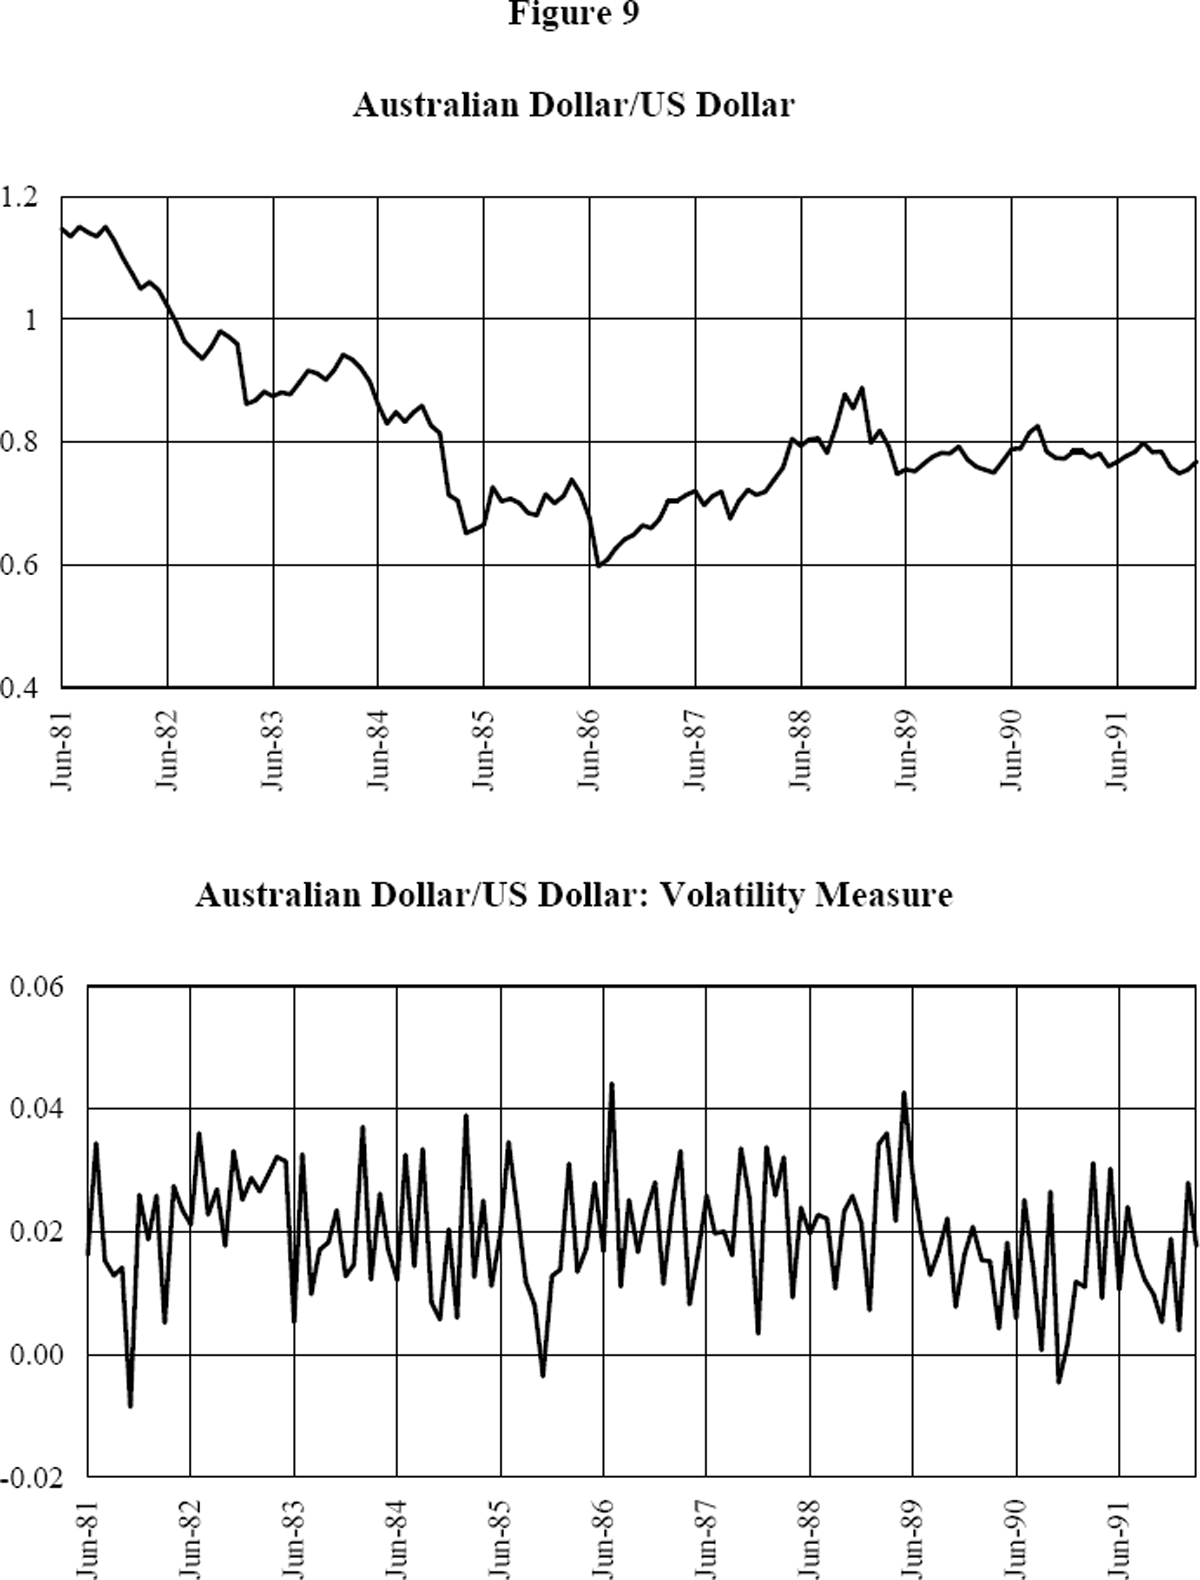 Figure 9: Australian Dollar/US Dollar and Volatility Measure